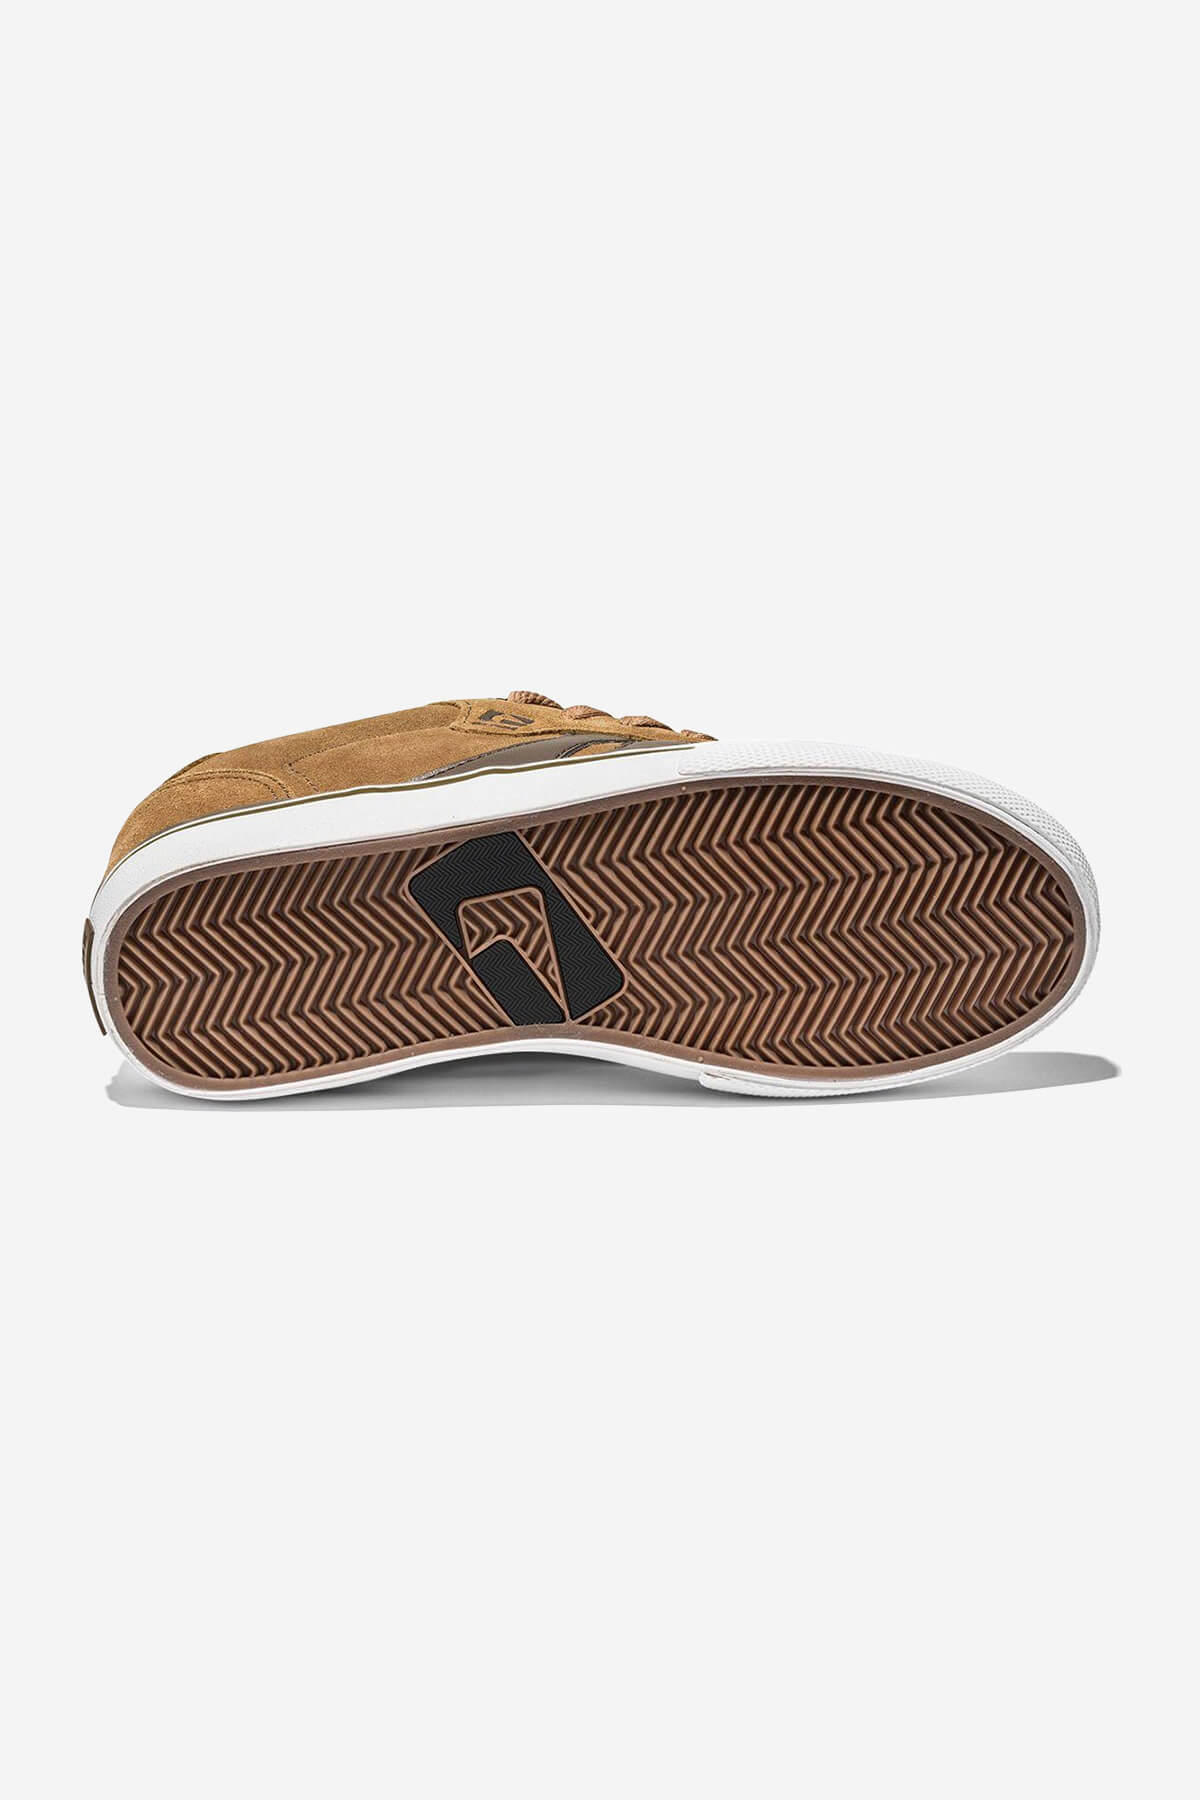 Globe - Encore 2 - Tan/Brown - skateboard Chaussures